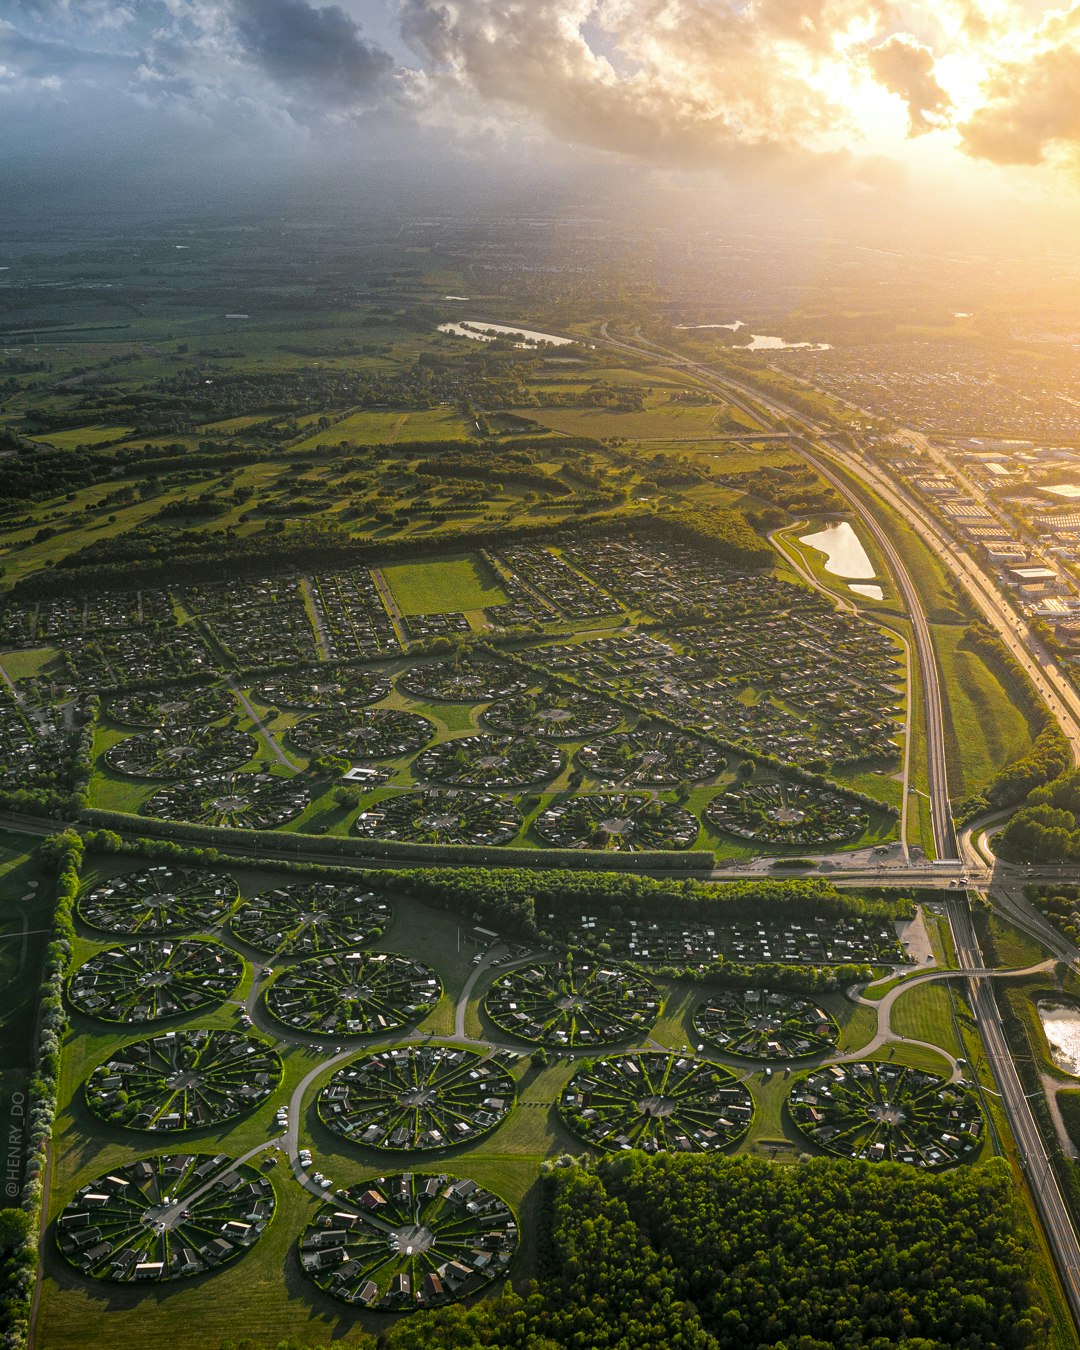 Denmark's green Garden City looks like crop circles